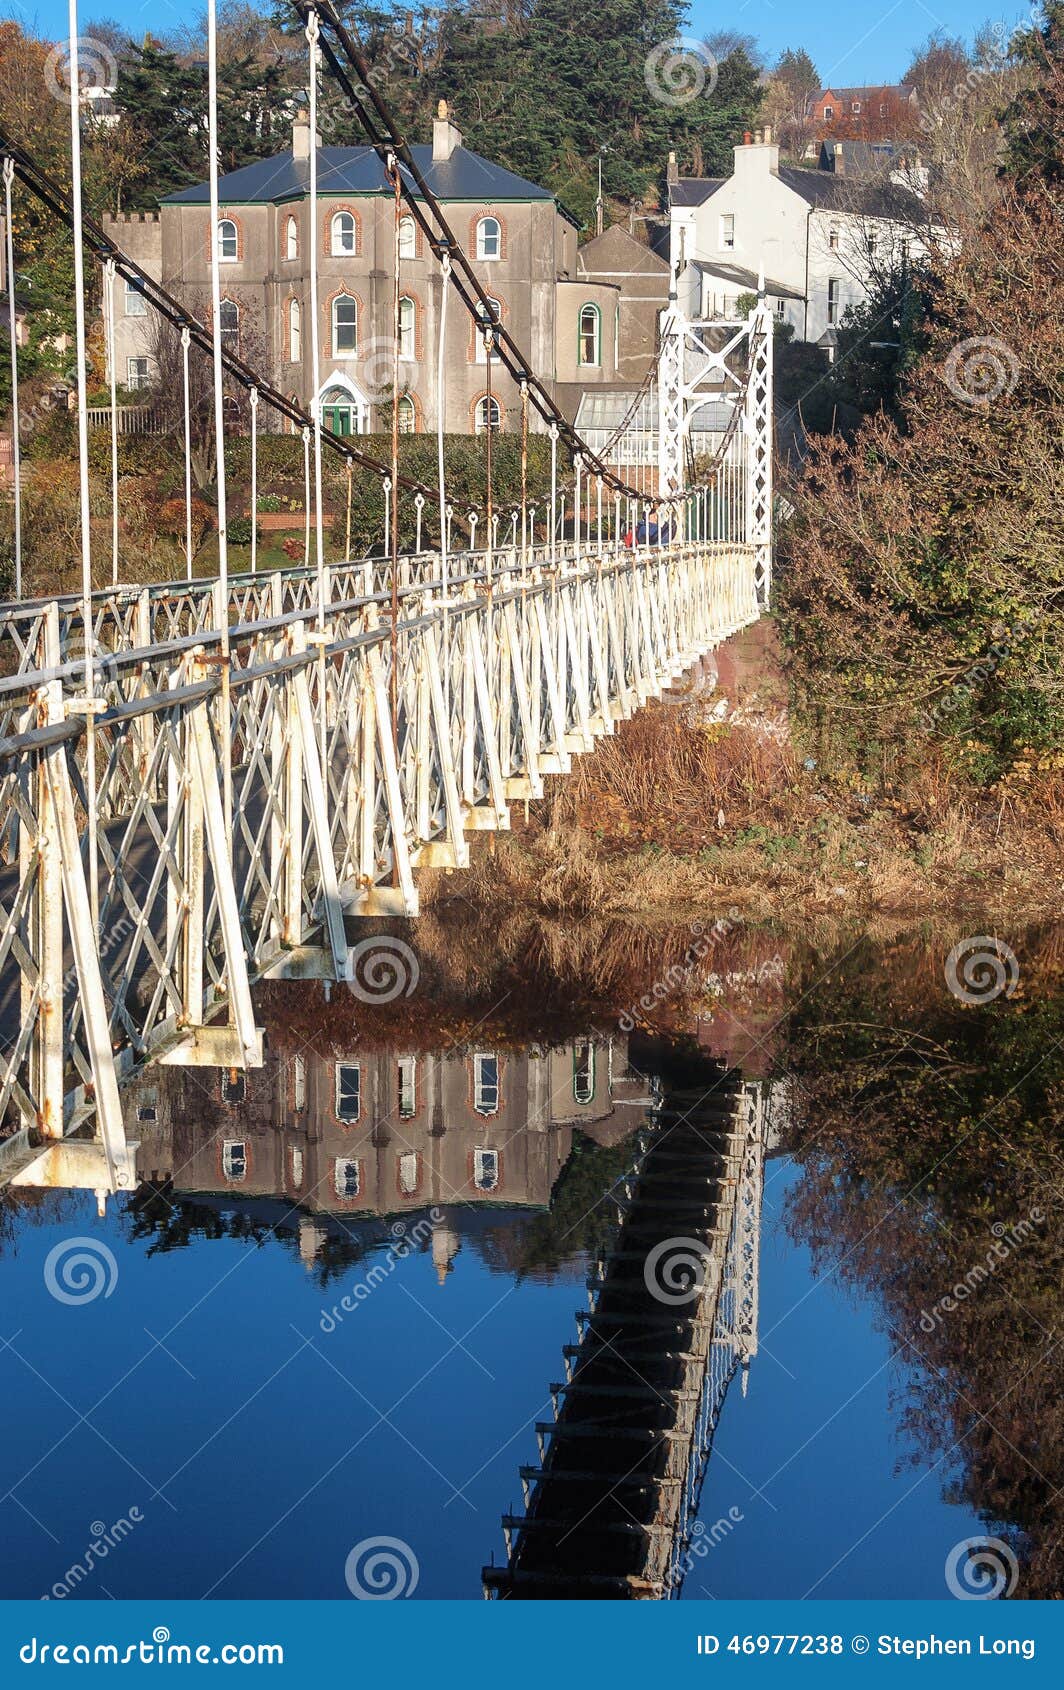 daly s footbridge, cork, ireland